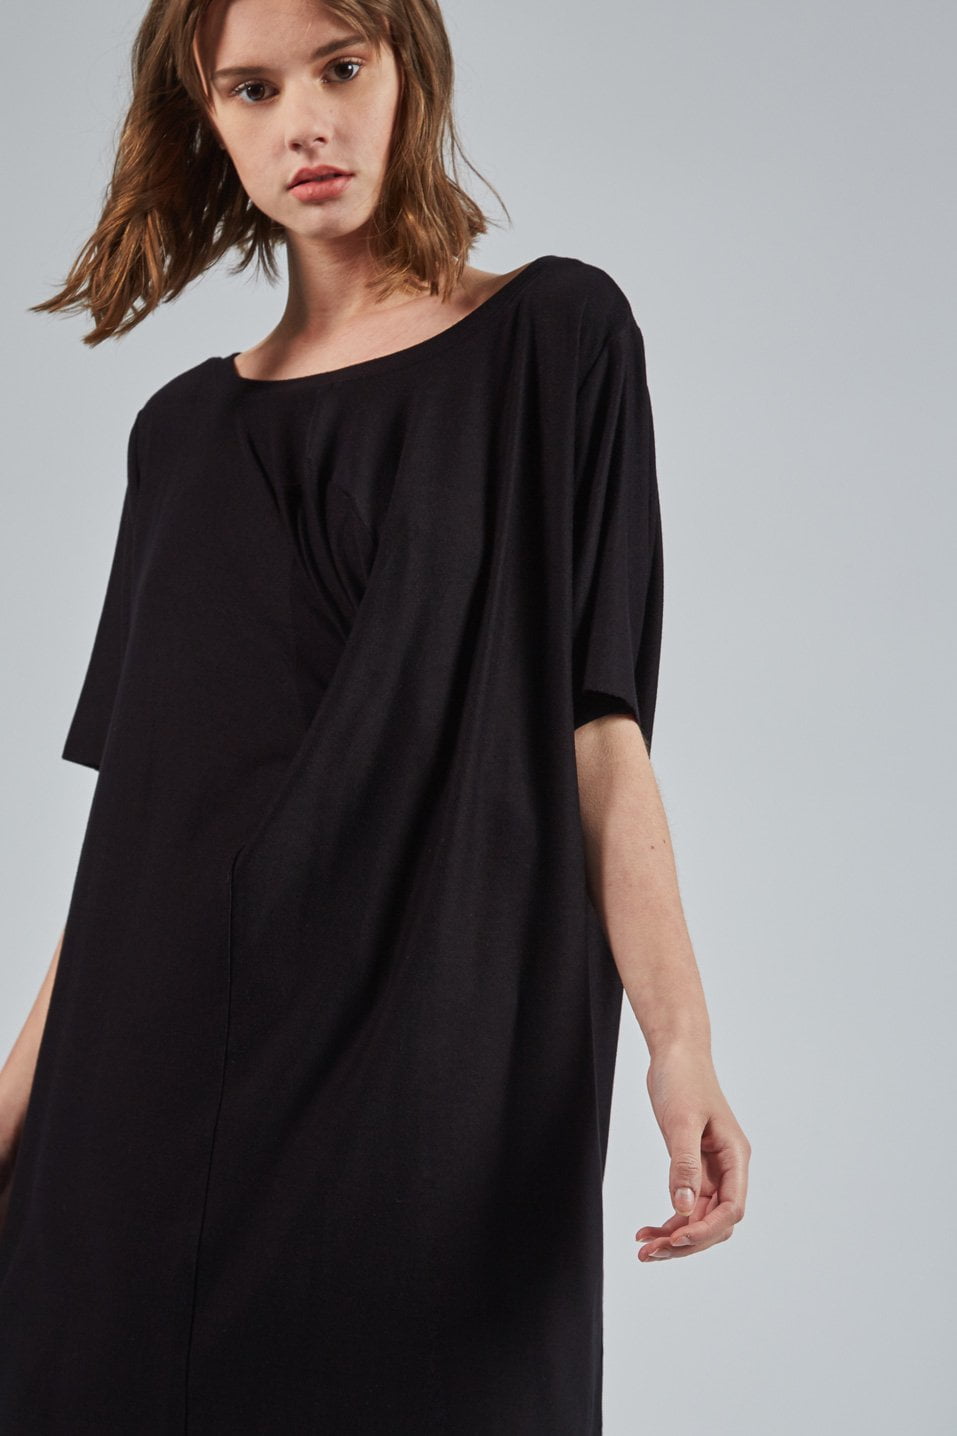 Women's Mamba Black 4-Sleeve Shirt - Uztzu Clothing - Shop Super 4 in 1 T-shirts, Pants and hoodies online!